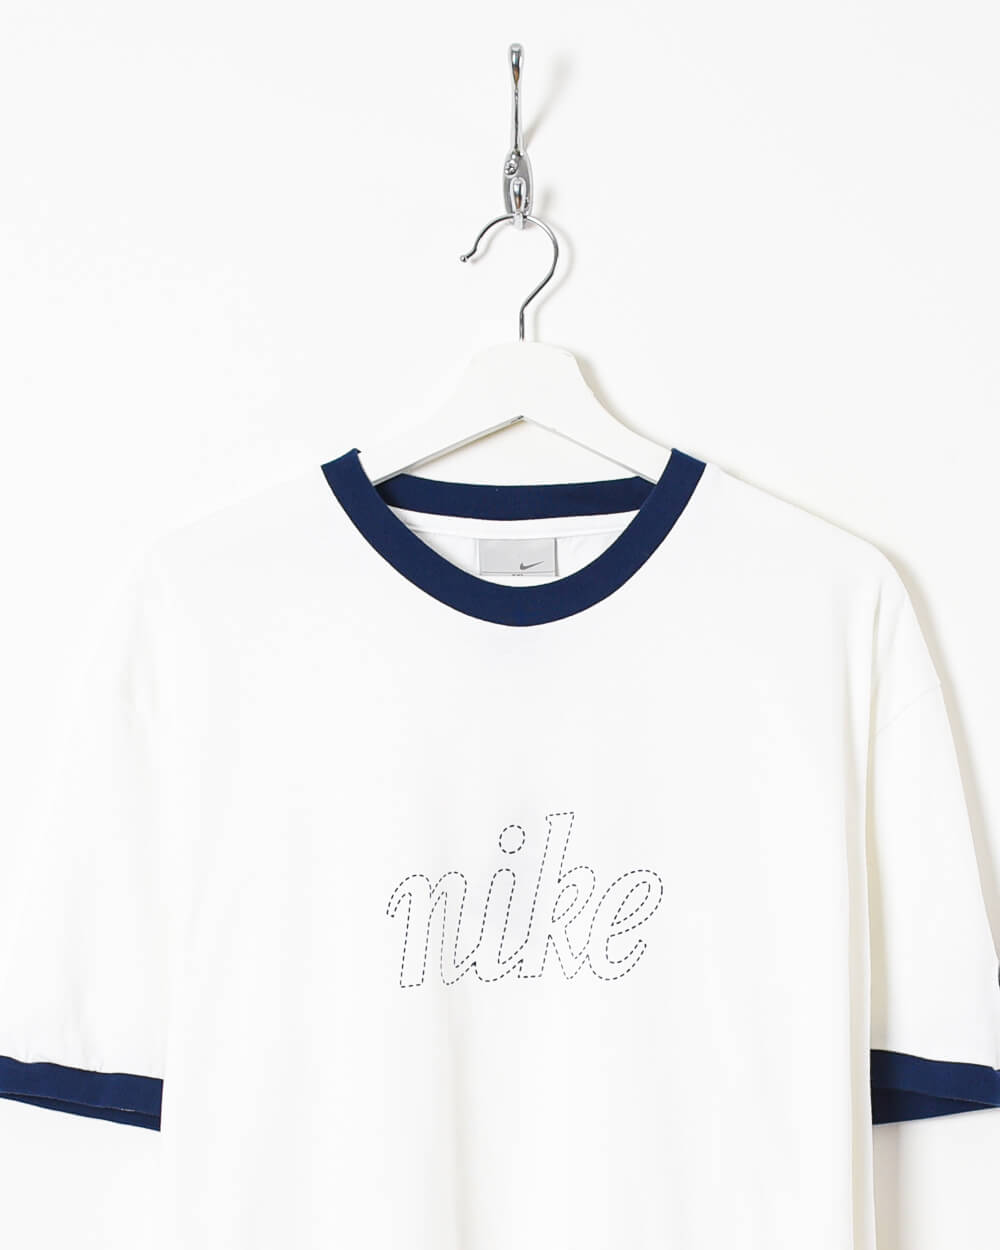 White Nike T-Shirt - XX-Large